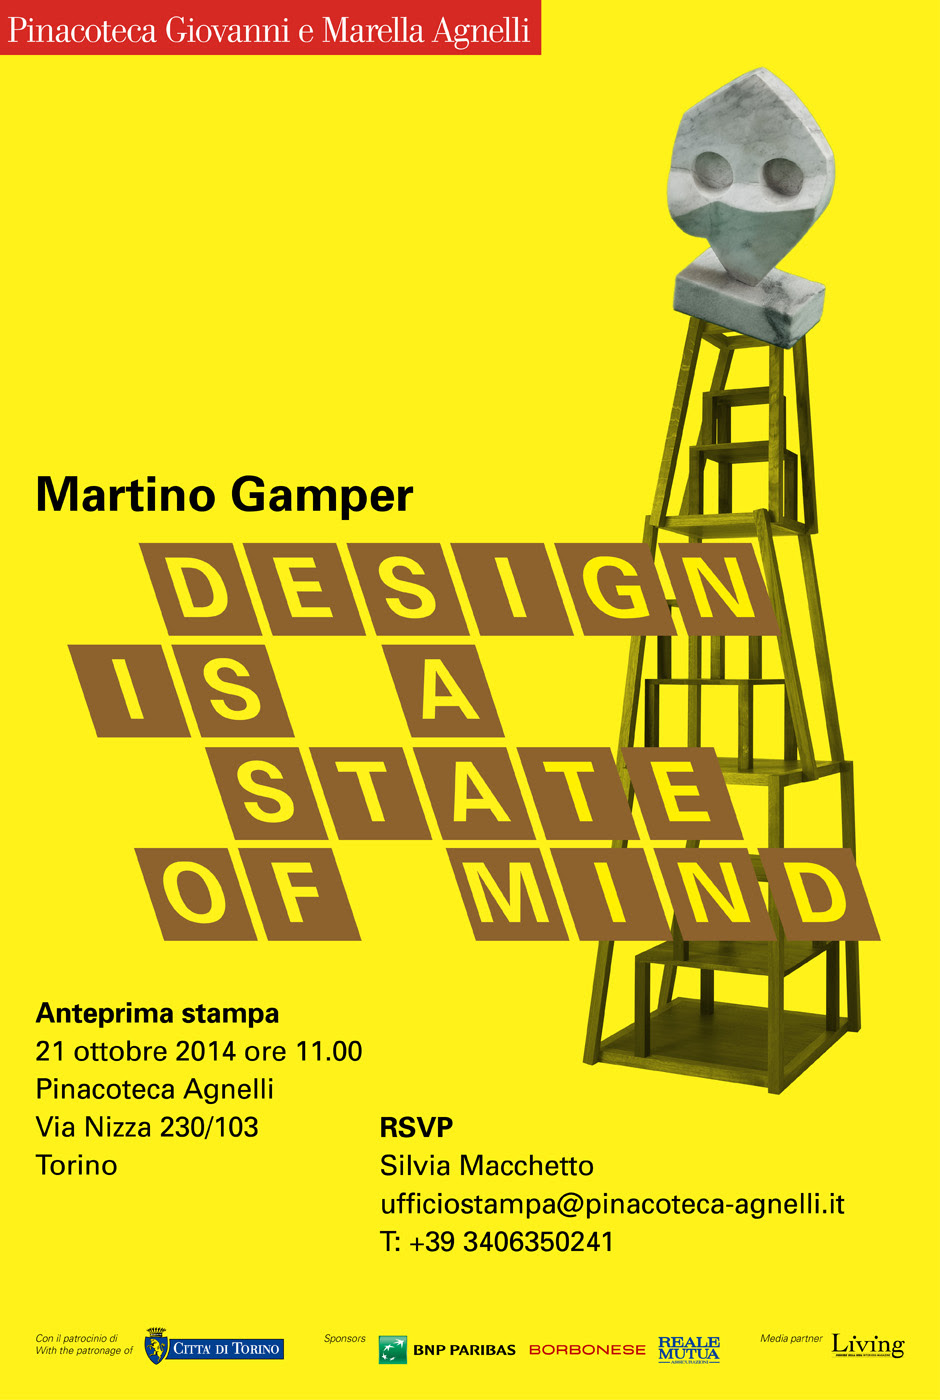 Martino Gamper - Design is a state of mind